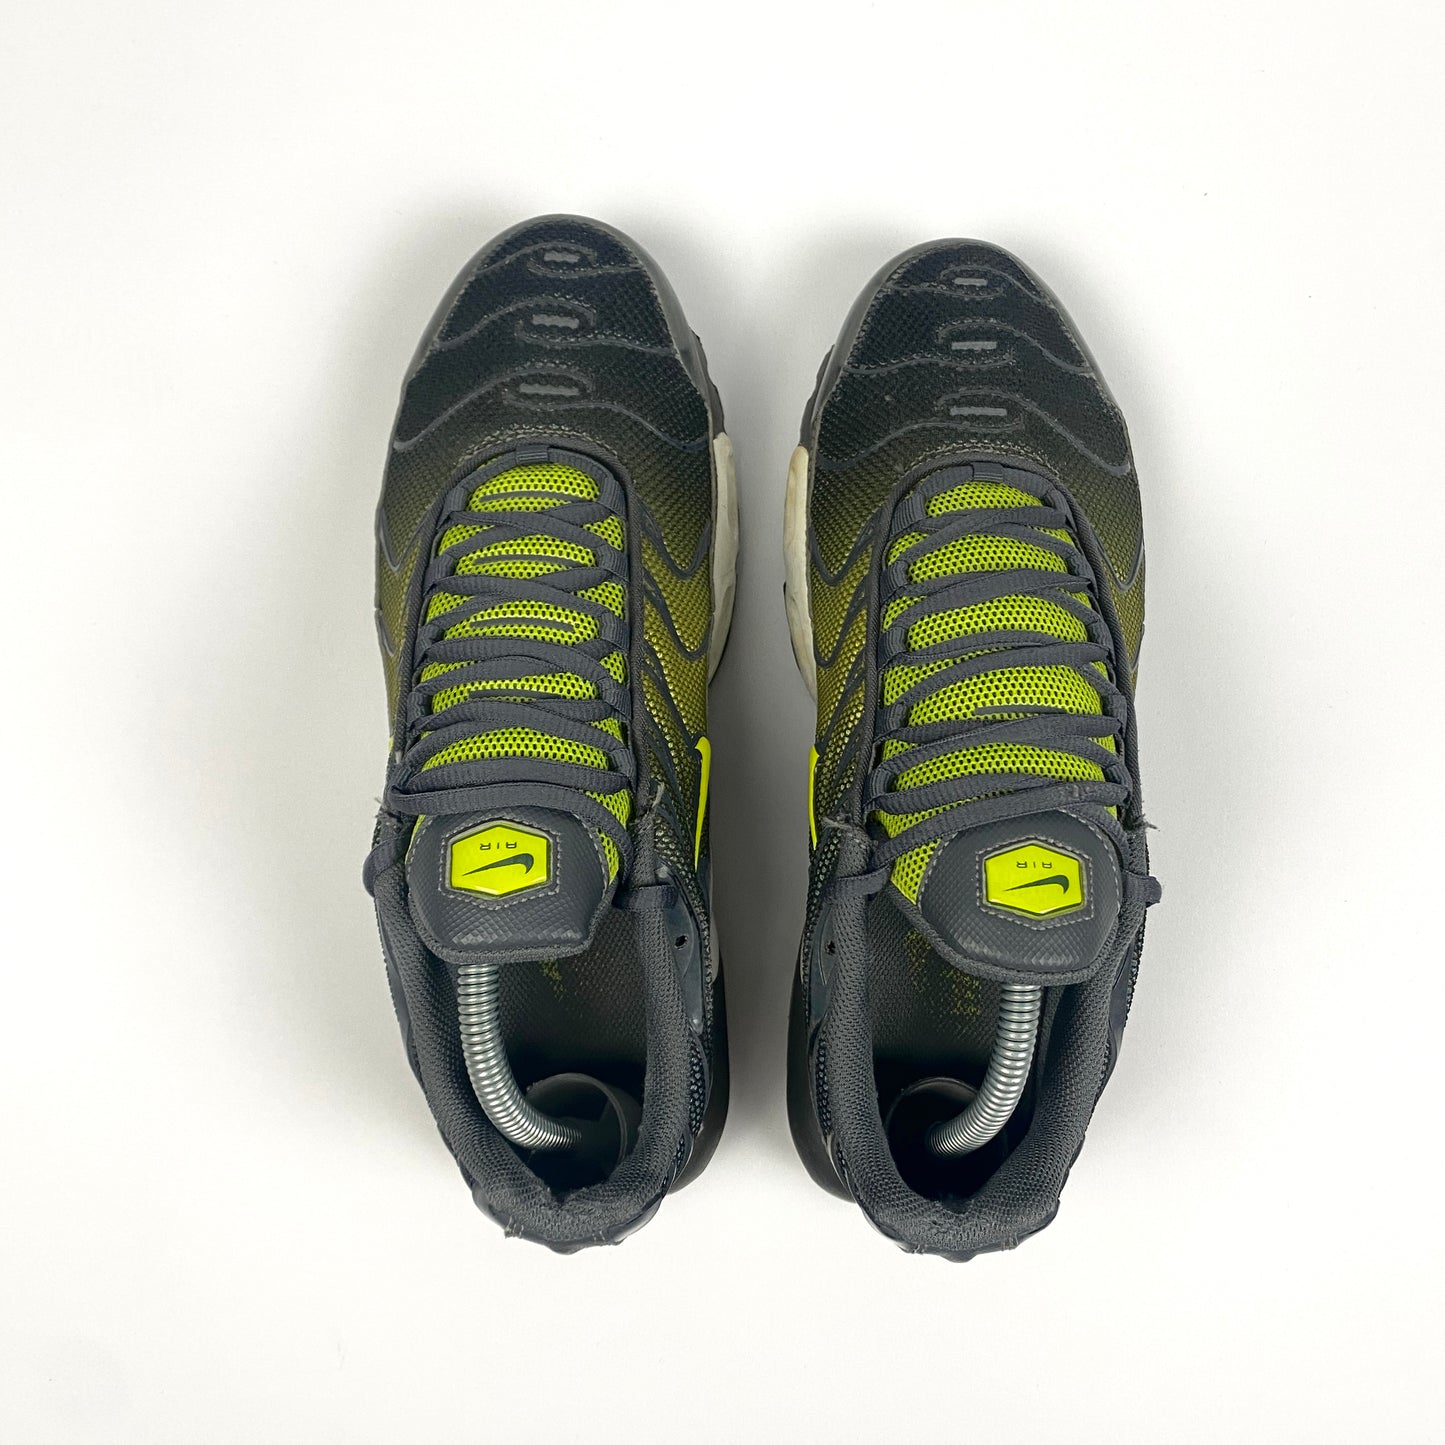 Nike Air Max Plus Tn 'Venom Green' (2014)